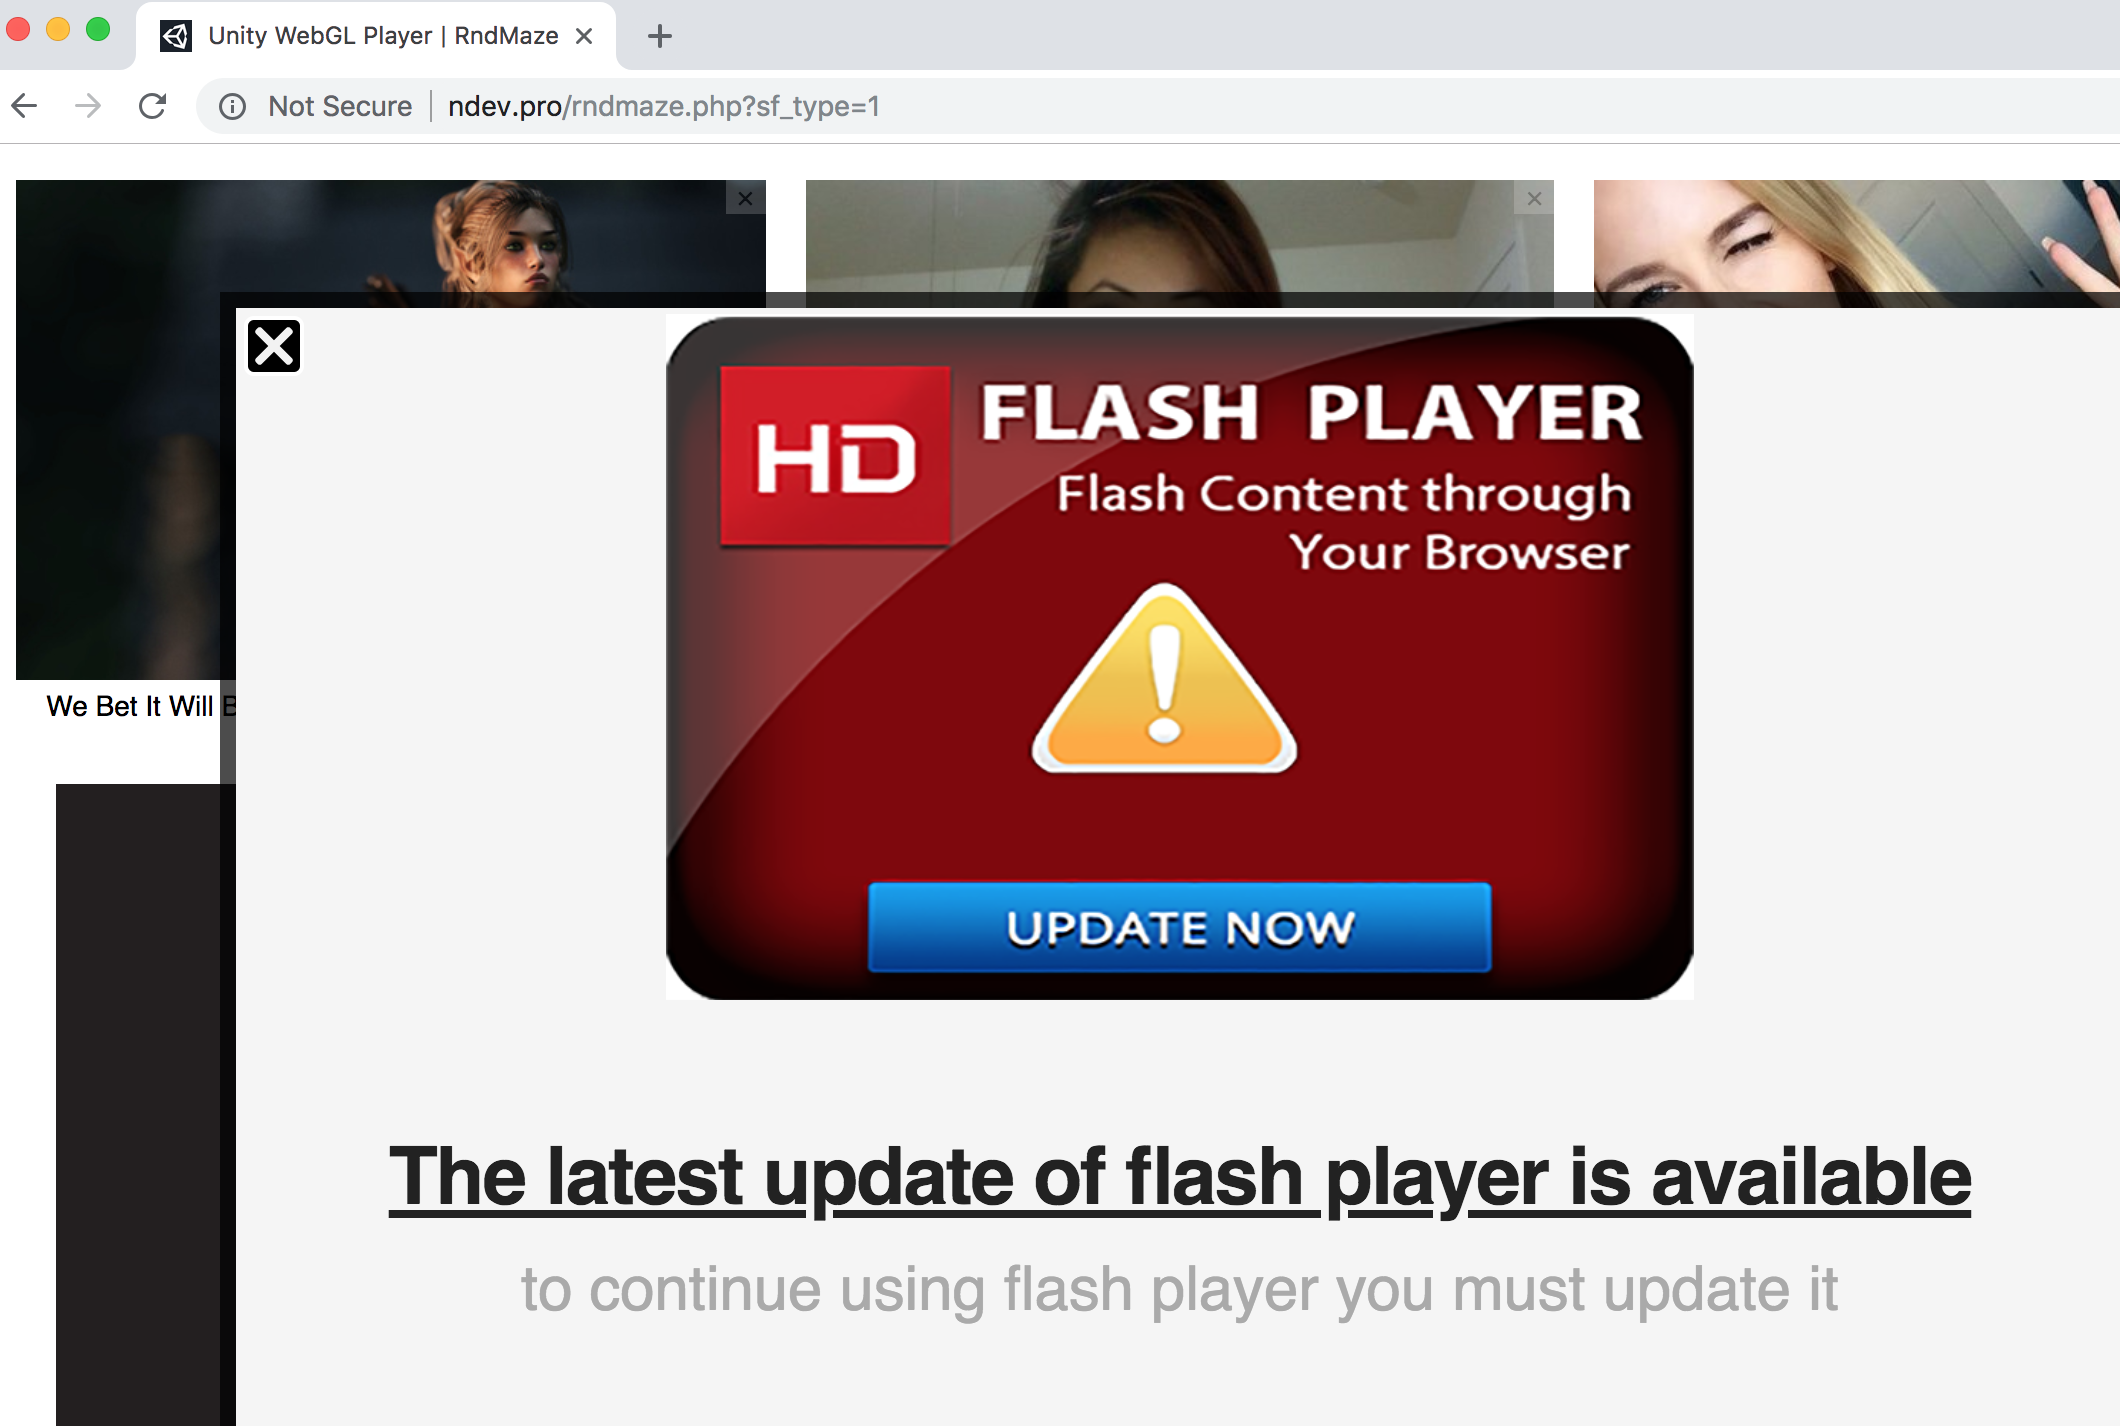 Ndev.pro fake Flash Player update alert